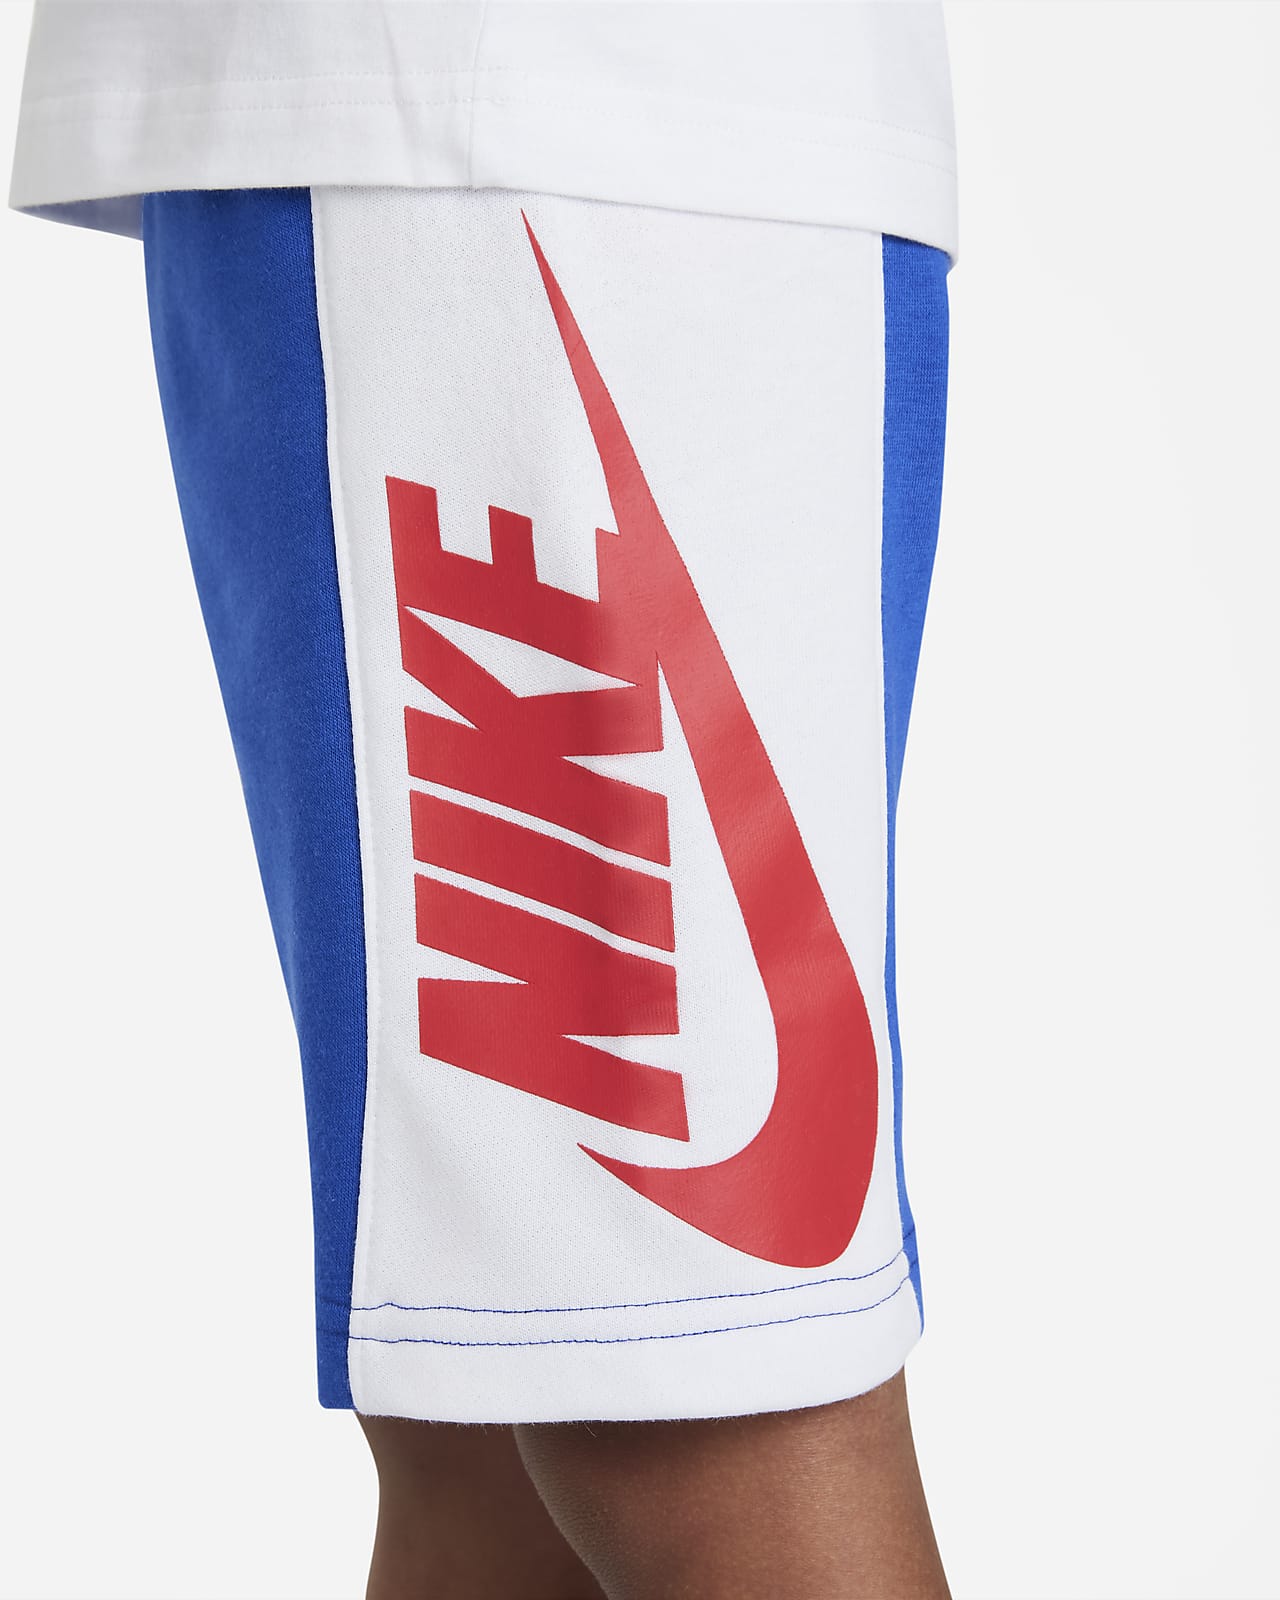 Blue Nike Mid Logo T-Shirt/Shorts Set Children